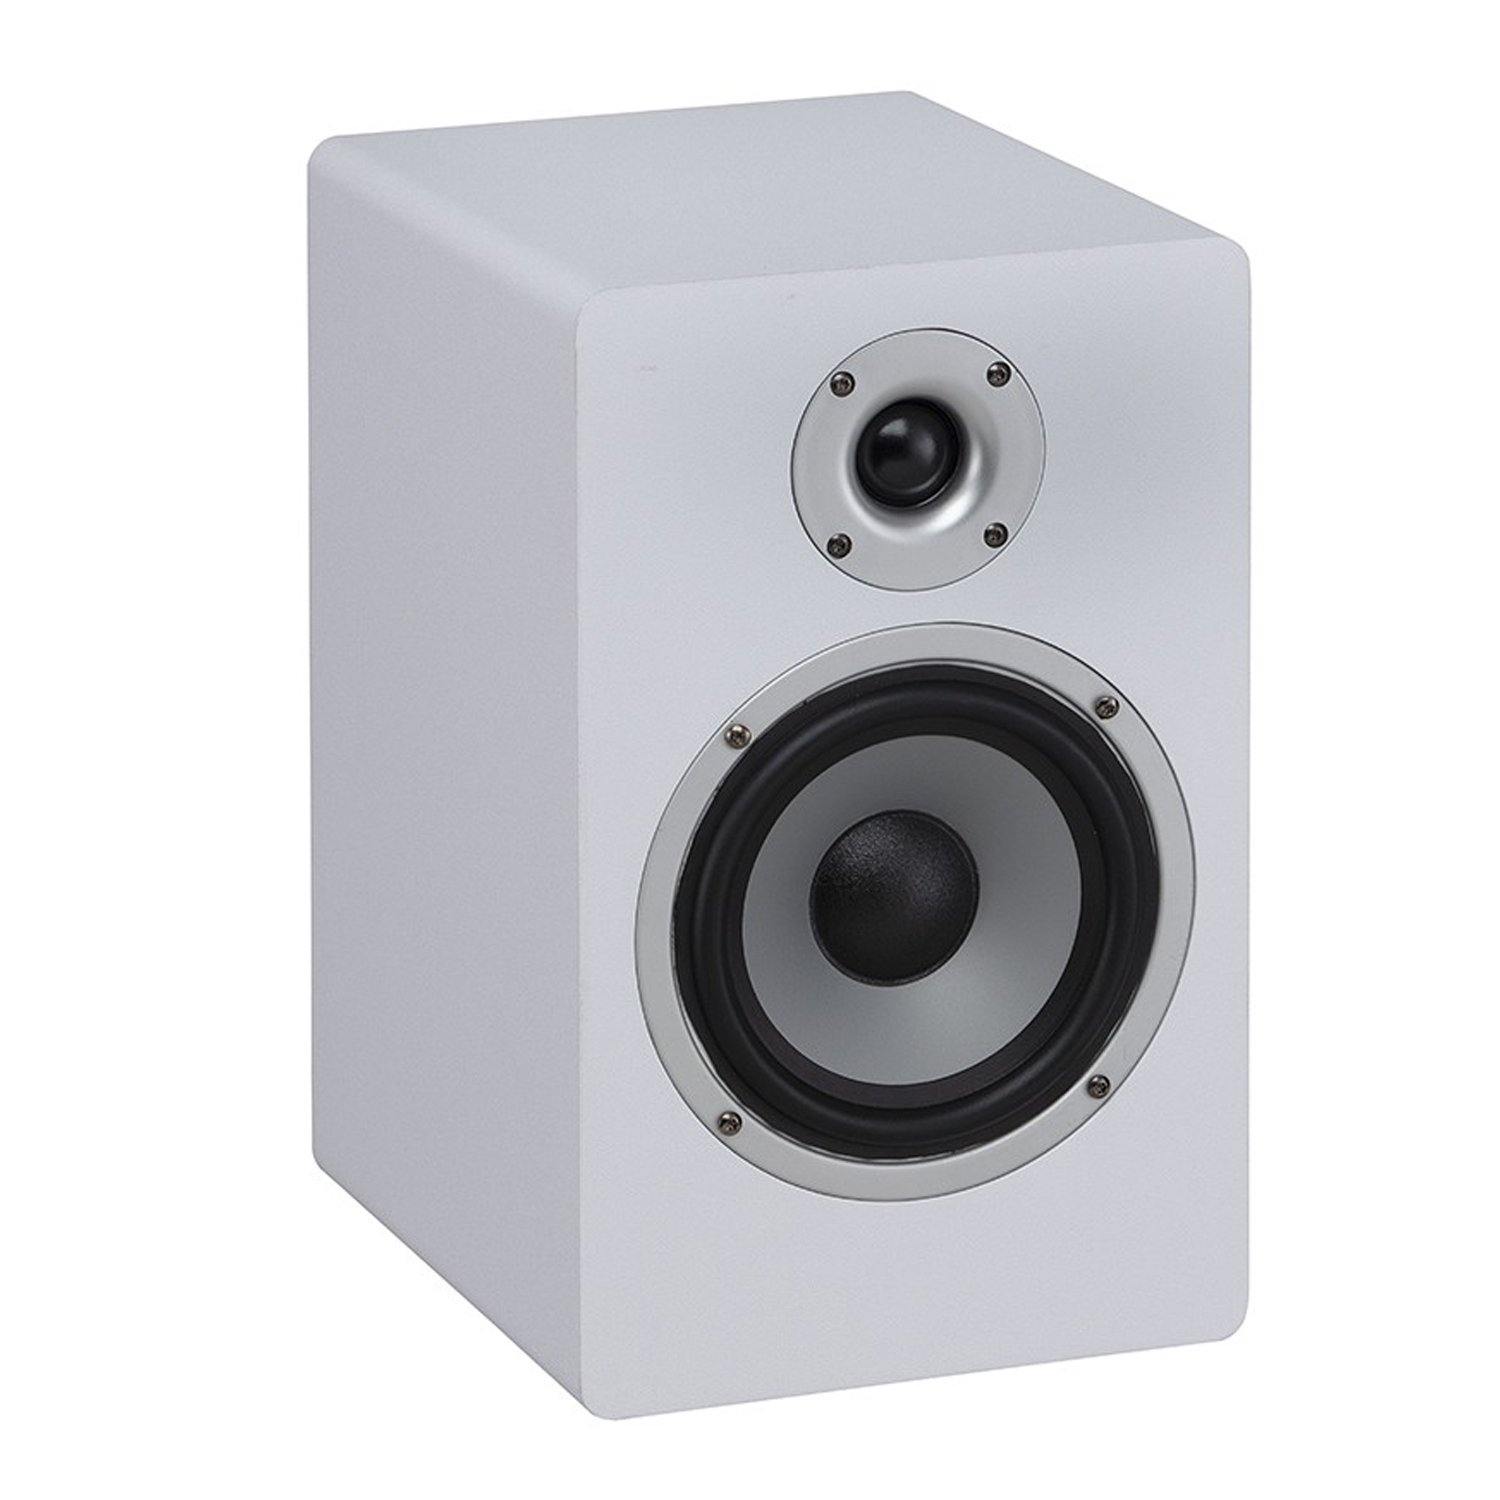 2 x Soundsation Clarirty A5 5.25" Studio Monitor White - DY Pro Audio